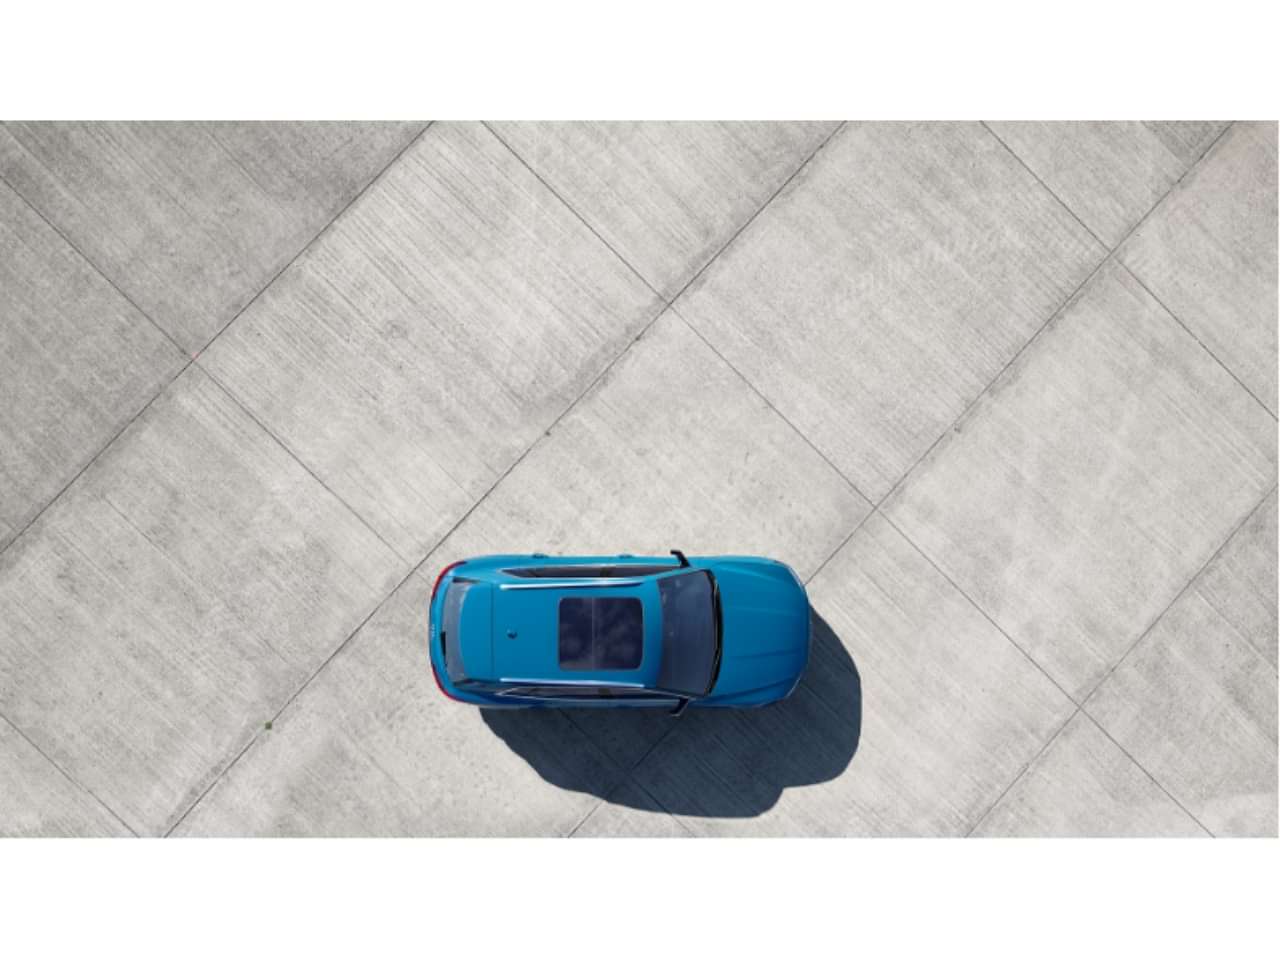 Audi e-tron  image